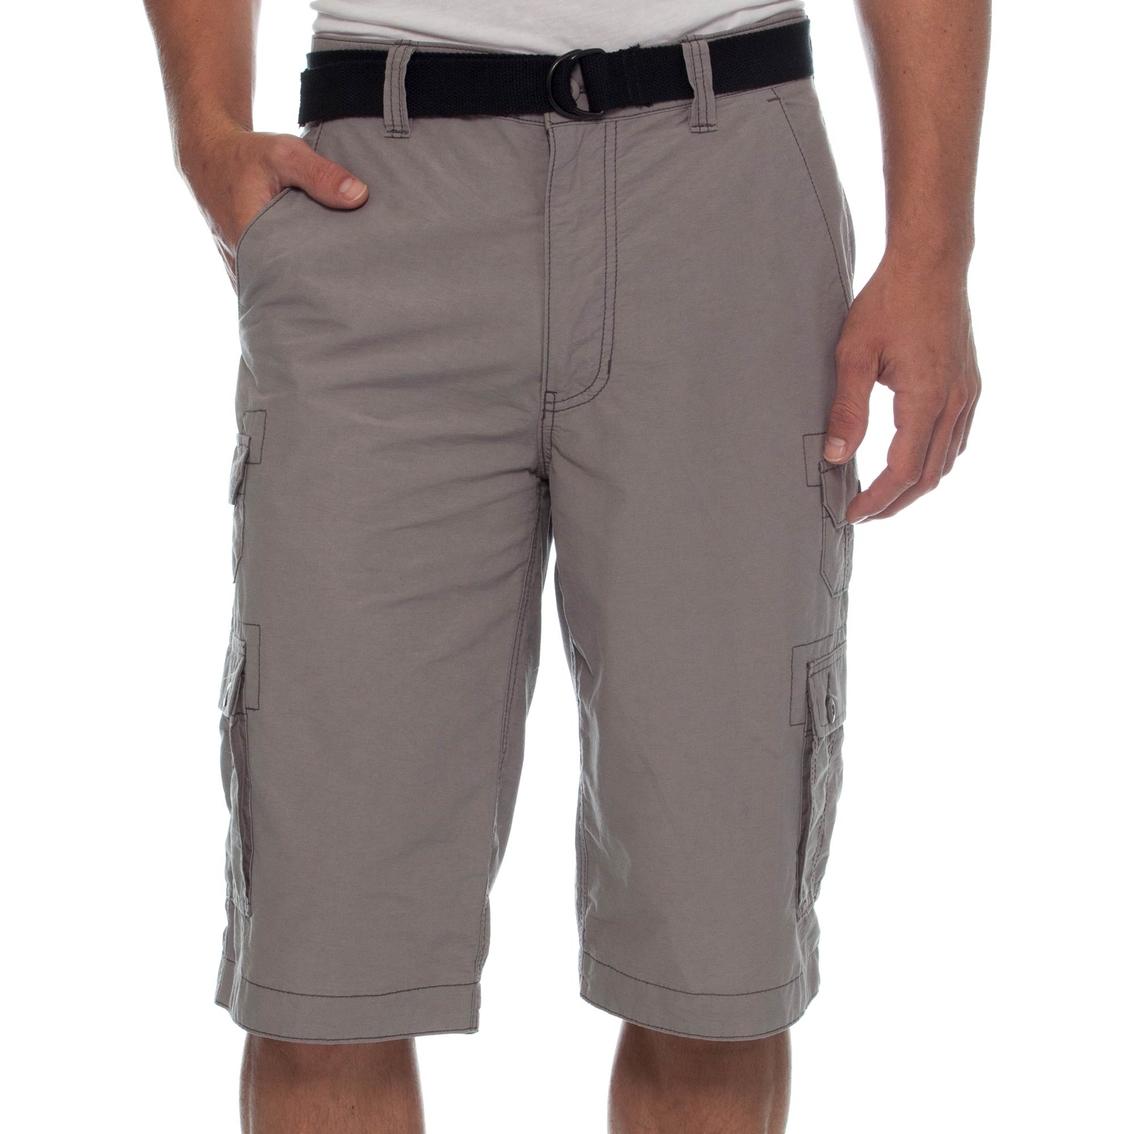 Wearfirst Messenger Cargo Shorts With Belt | Shorts | Clothing ...